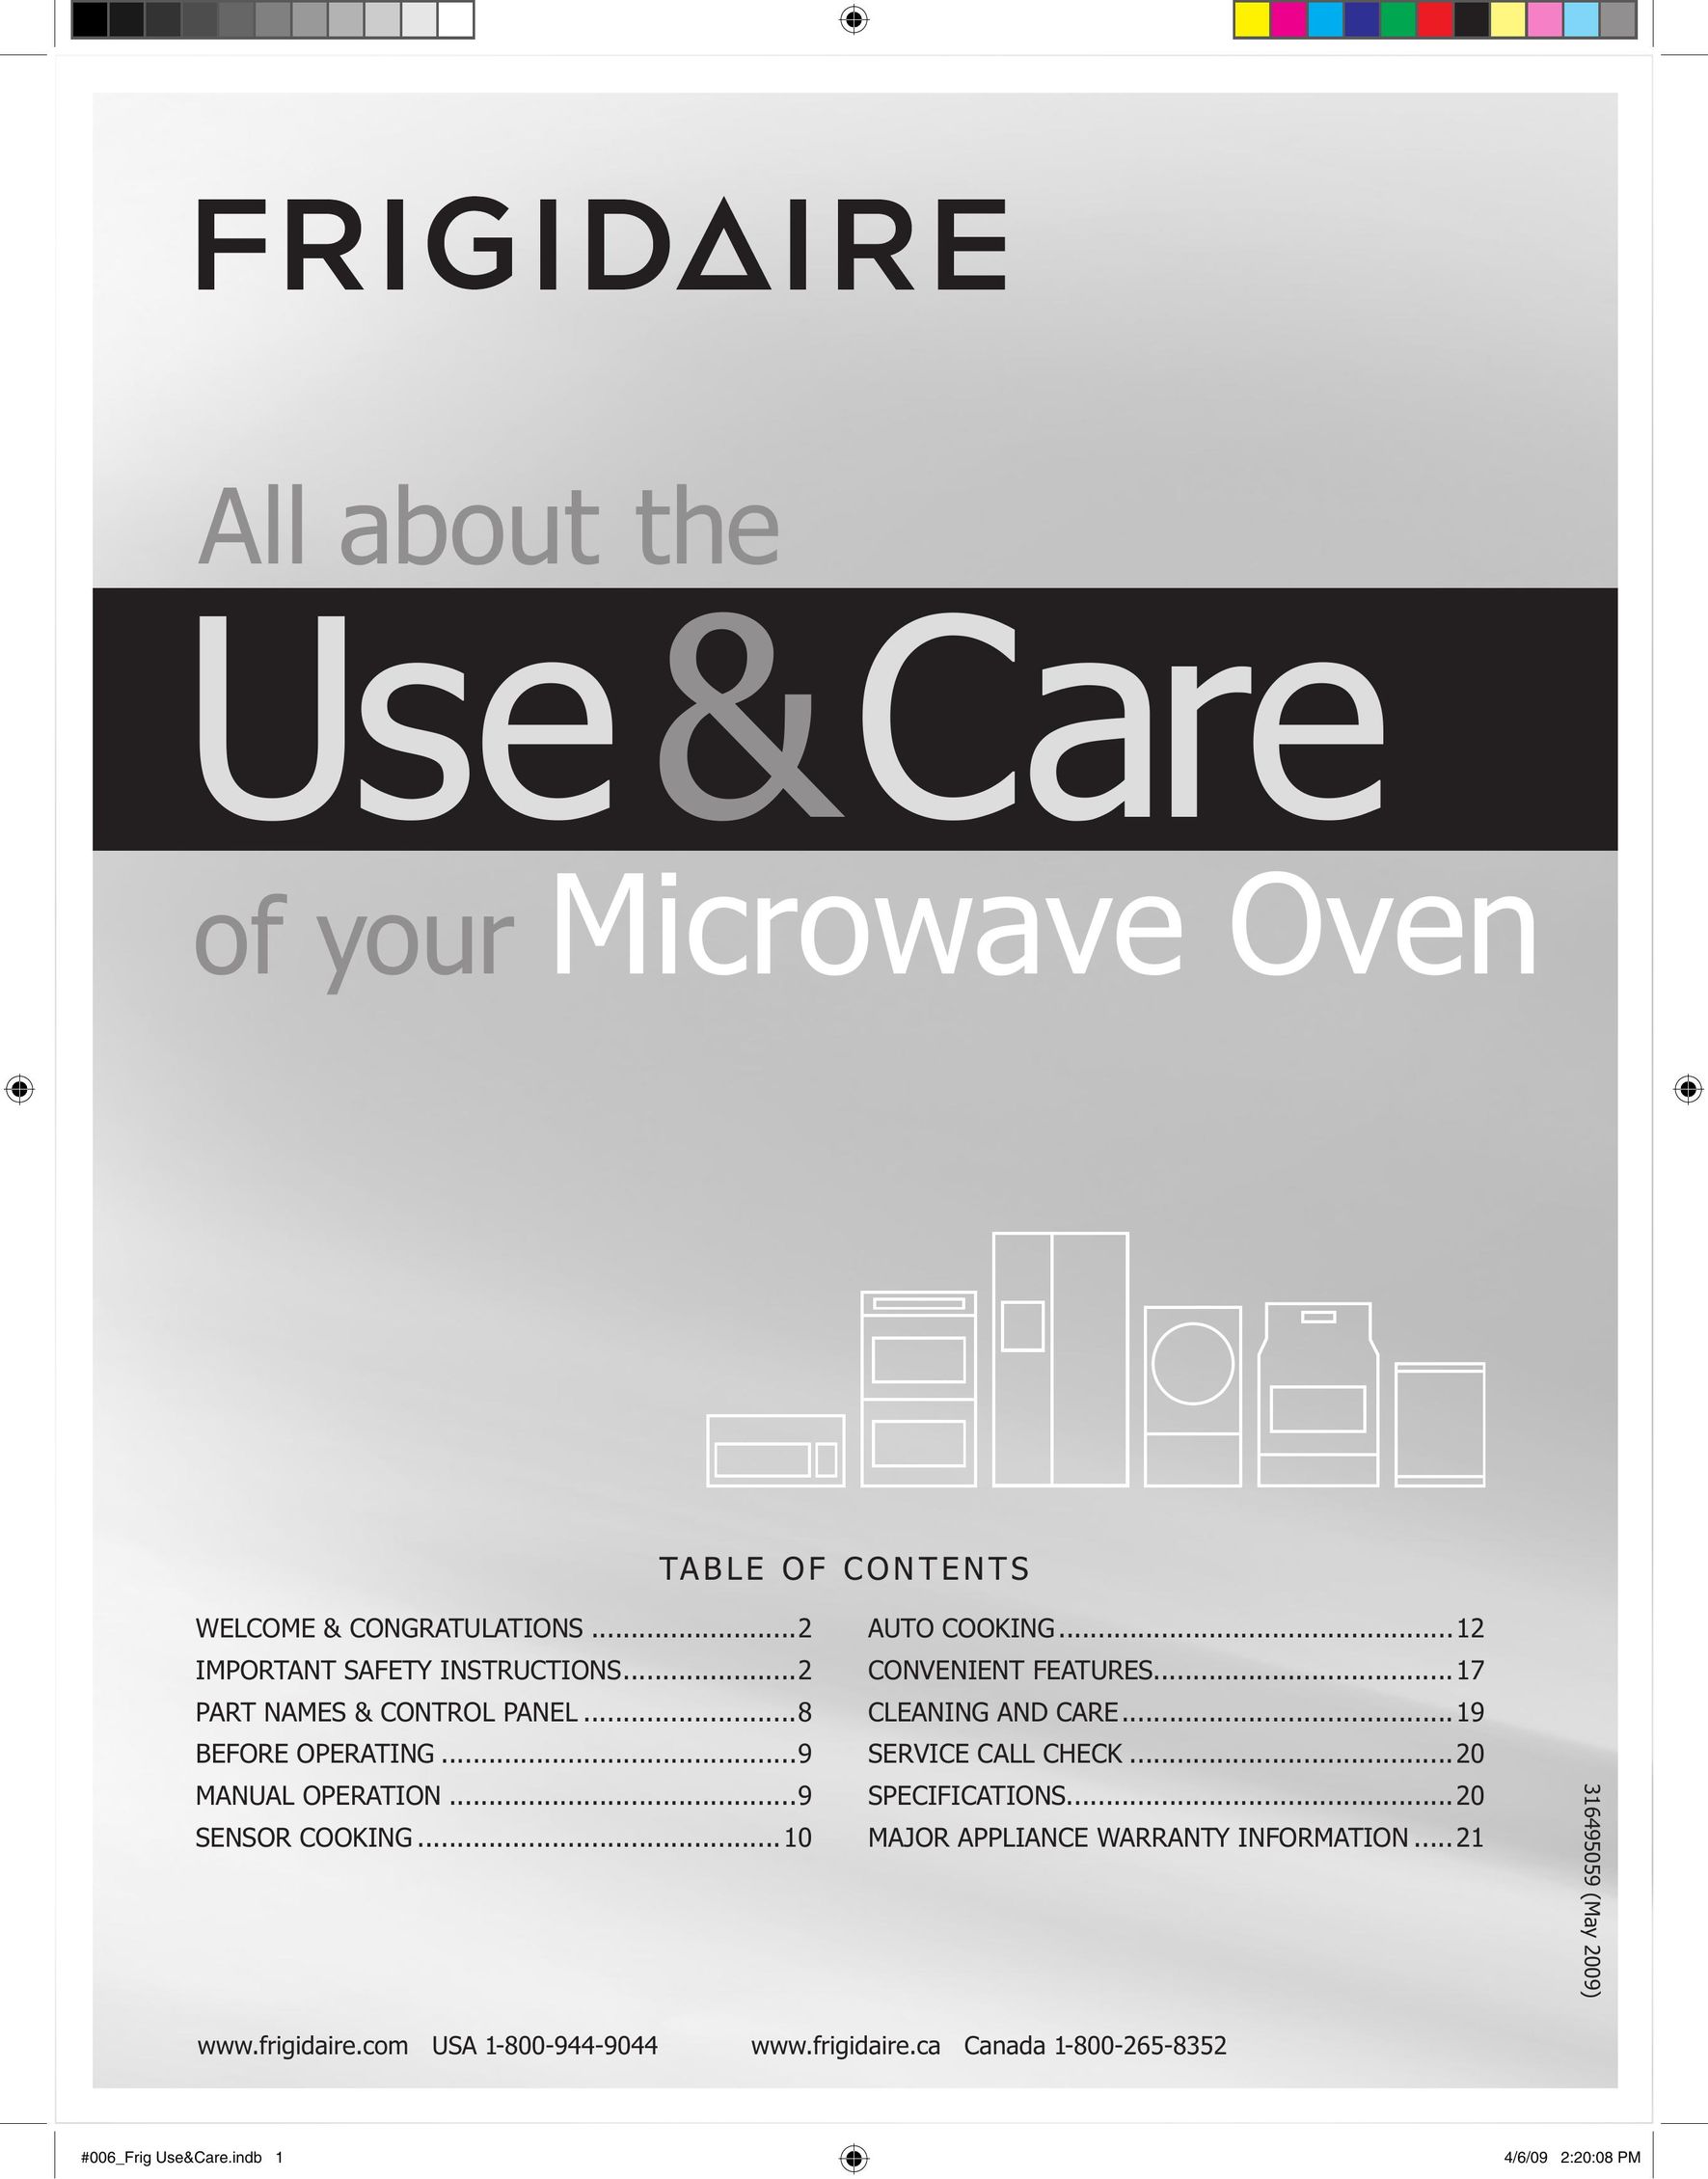 Frigidaire CGMO205kF Microwave Oven User Manual